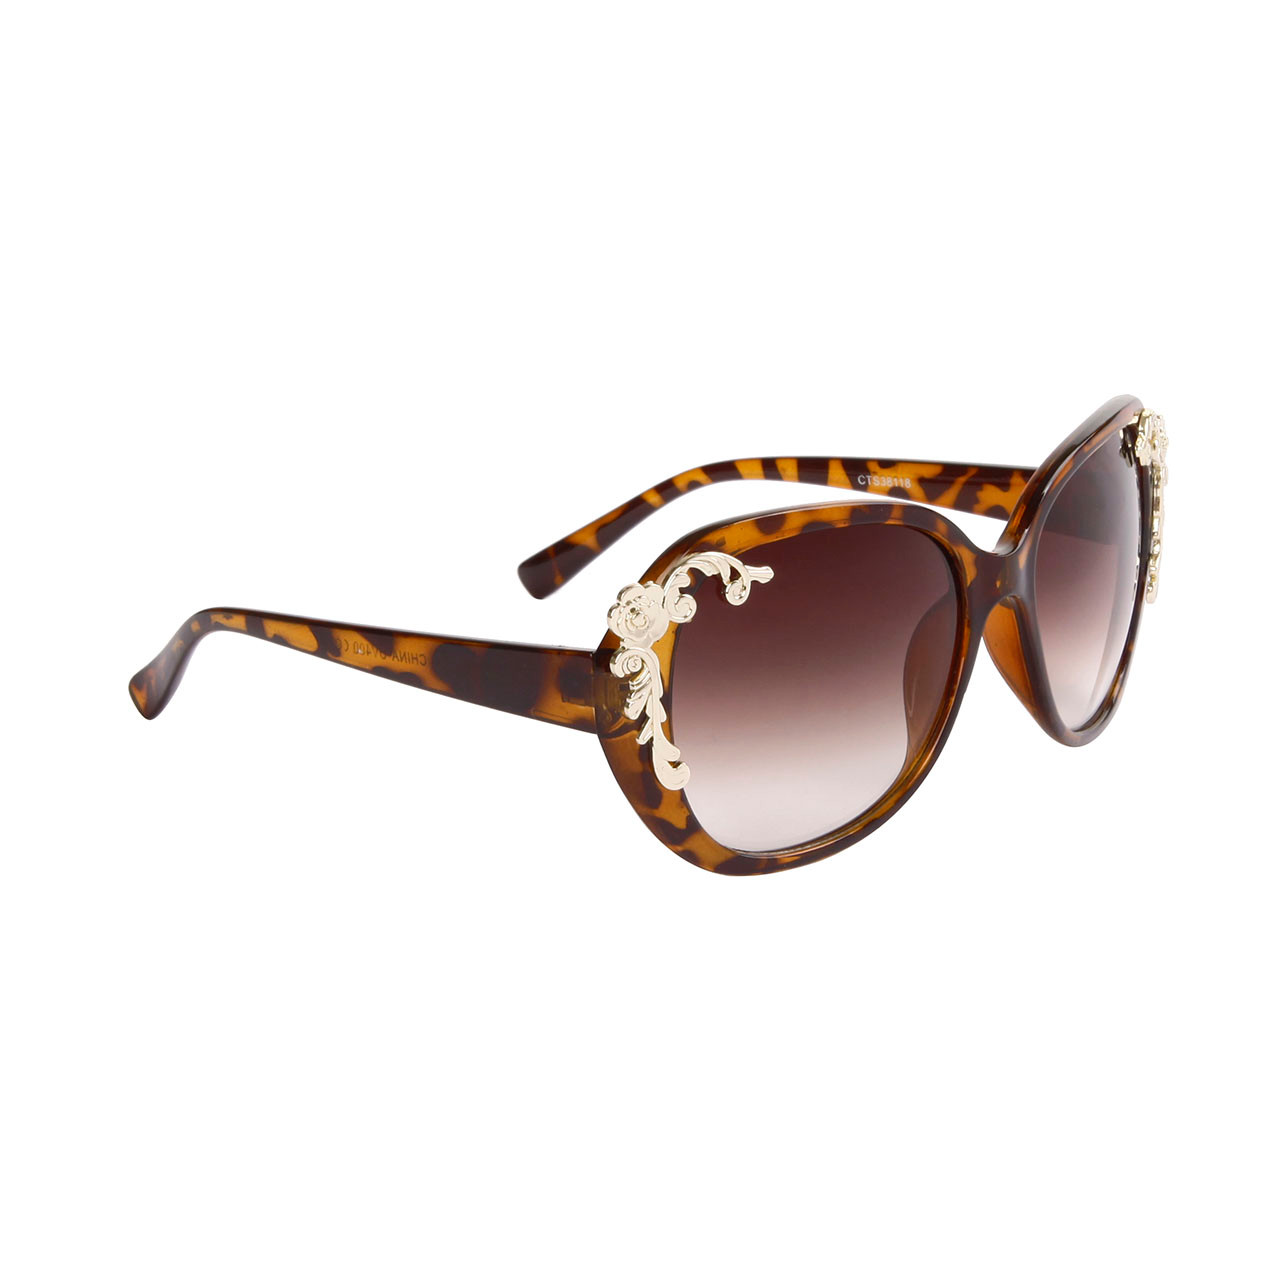 Women's Fashion Sunglasses Wholesale - Style #38118